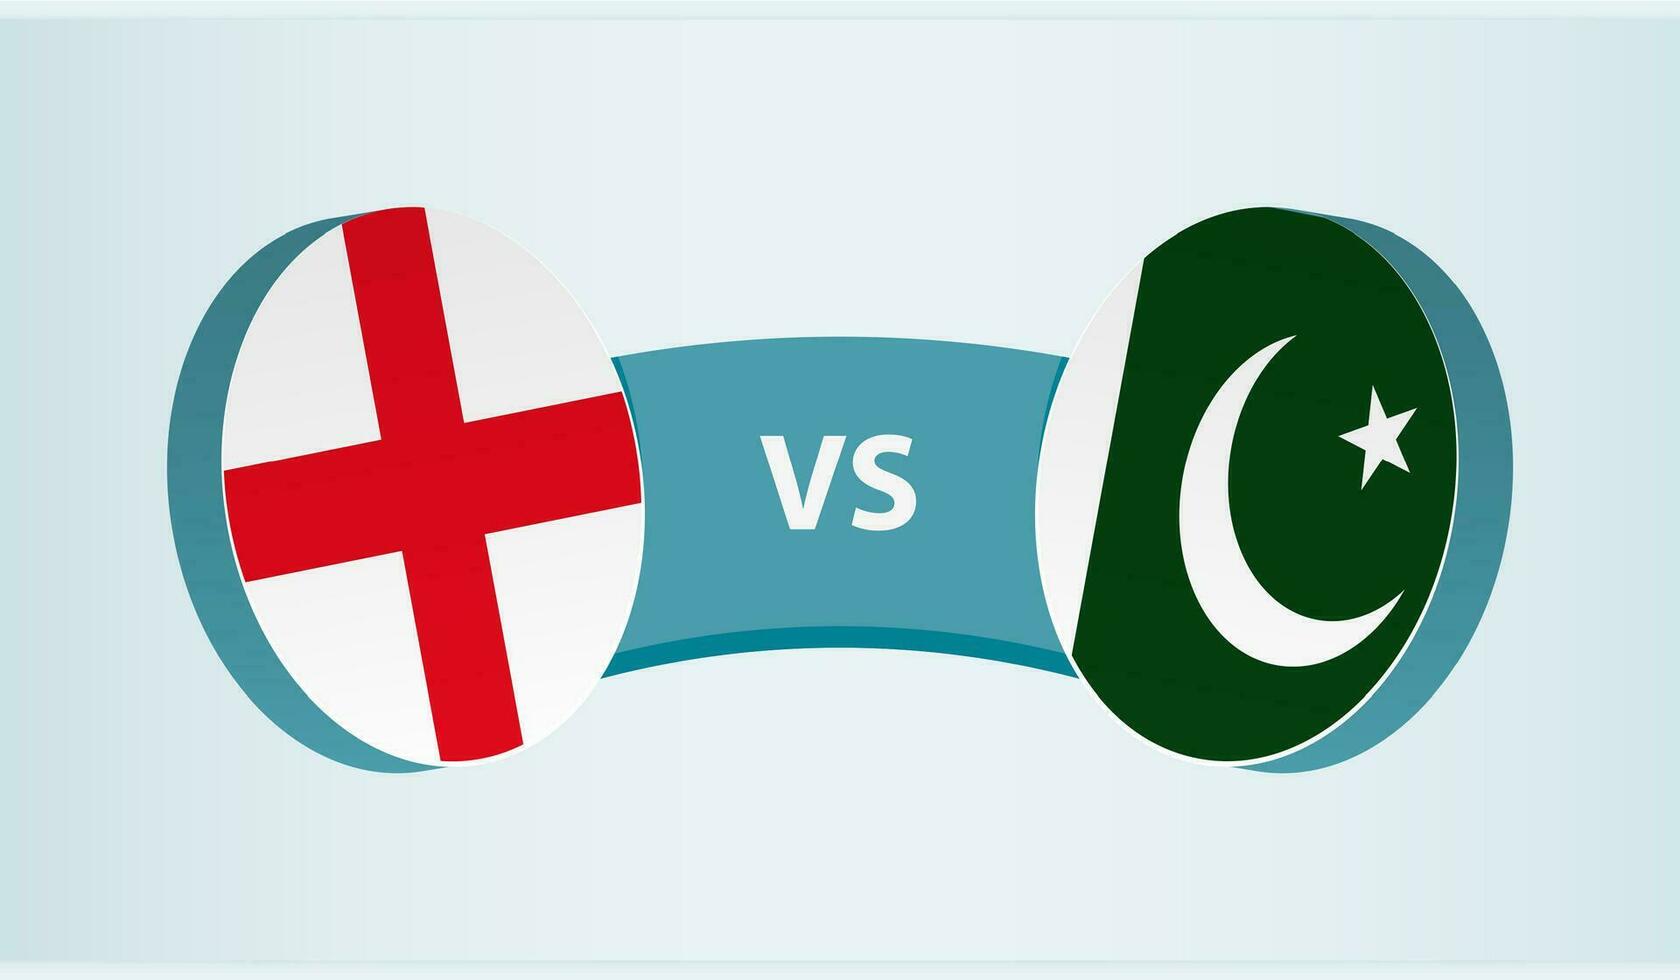 England mot Pakistan, team sporter konkurrens begrepp. vektor